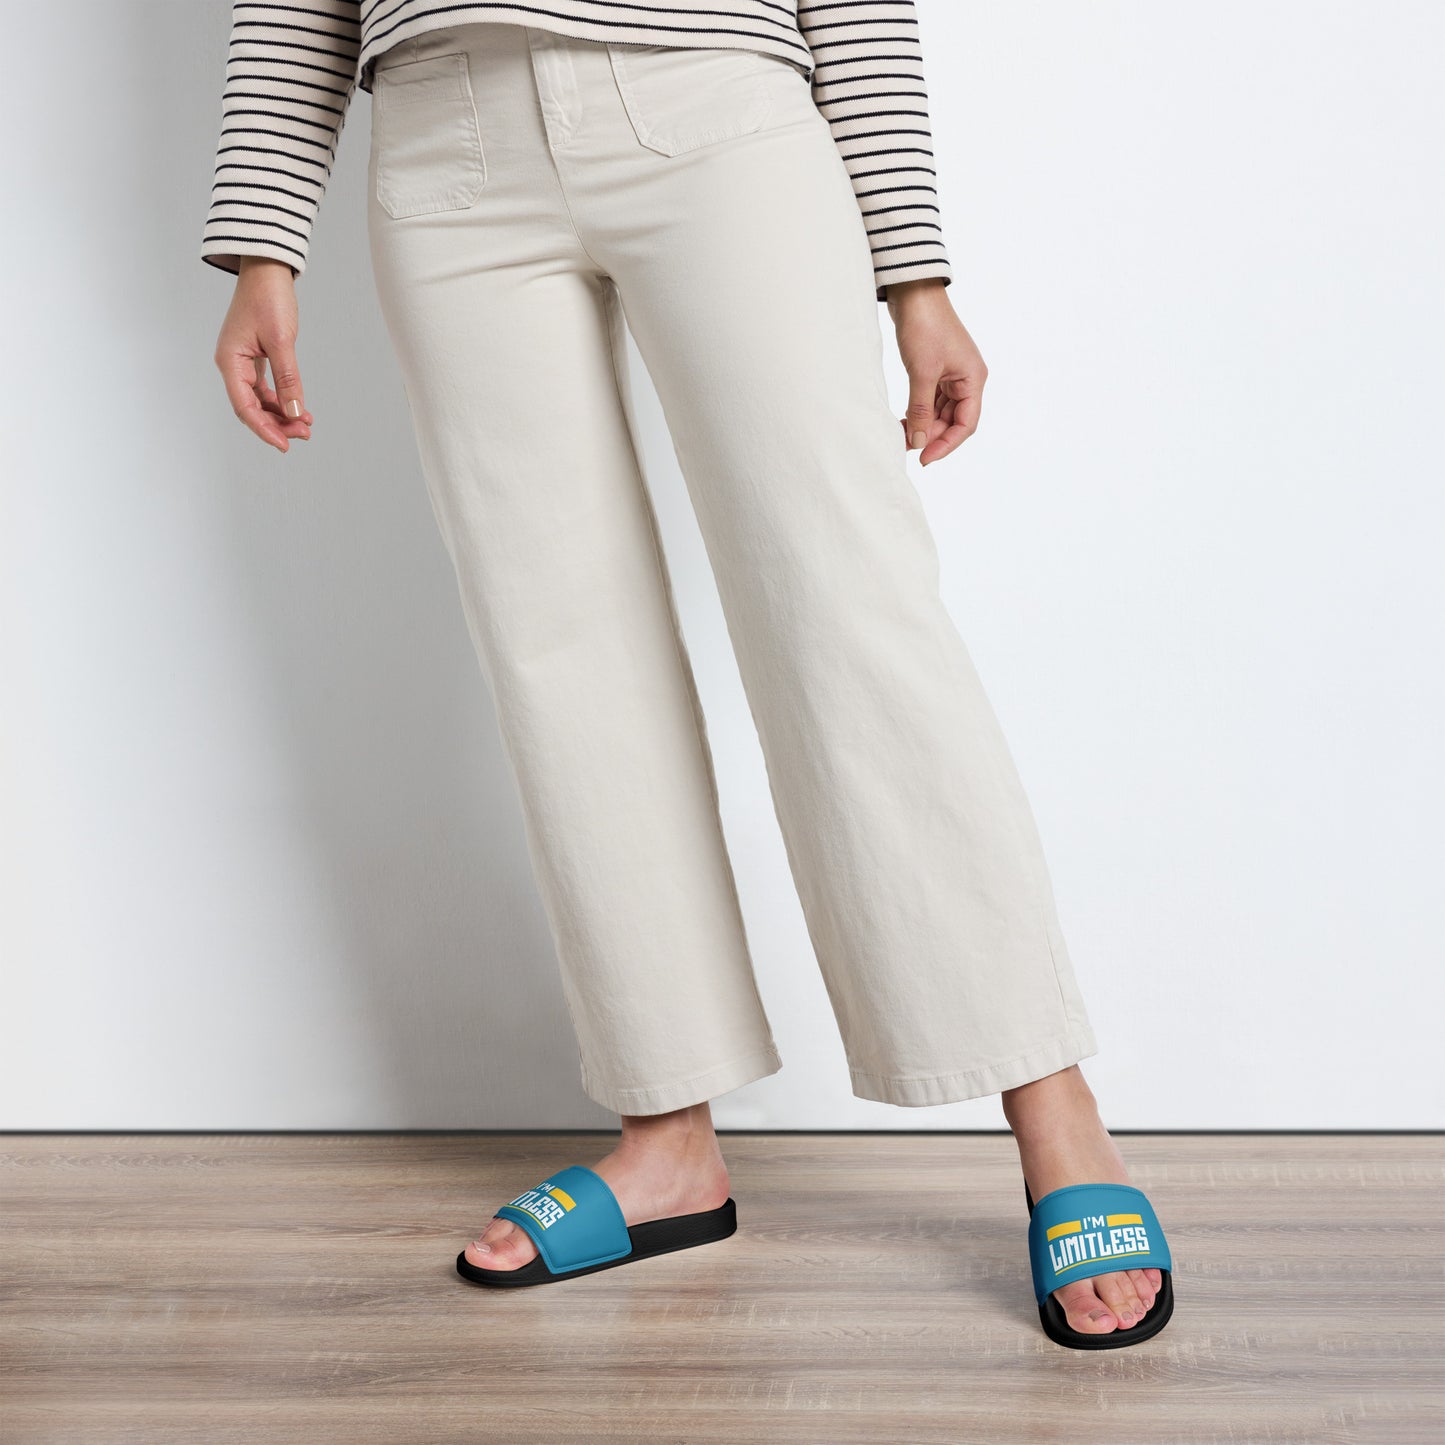 "I'm Limitless Women's Slides – Perfect Summer Comfort Footwear